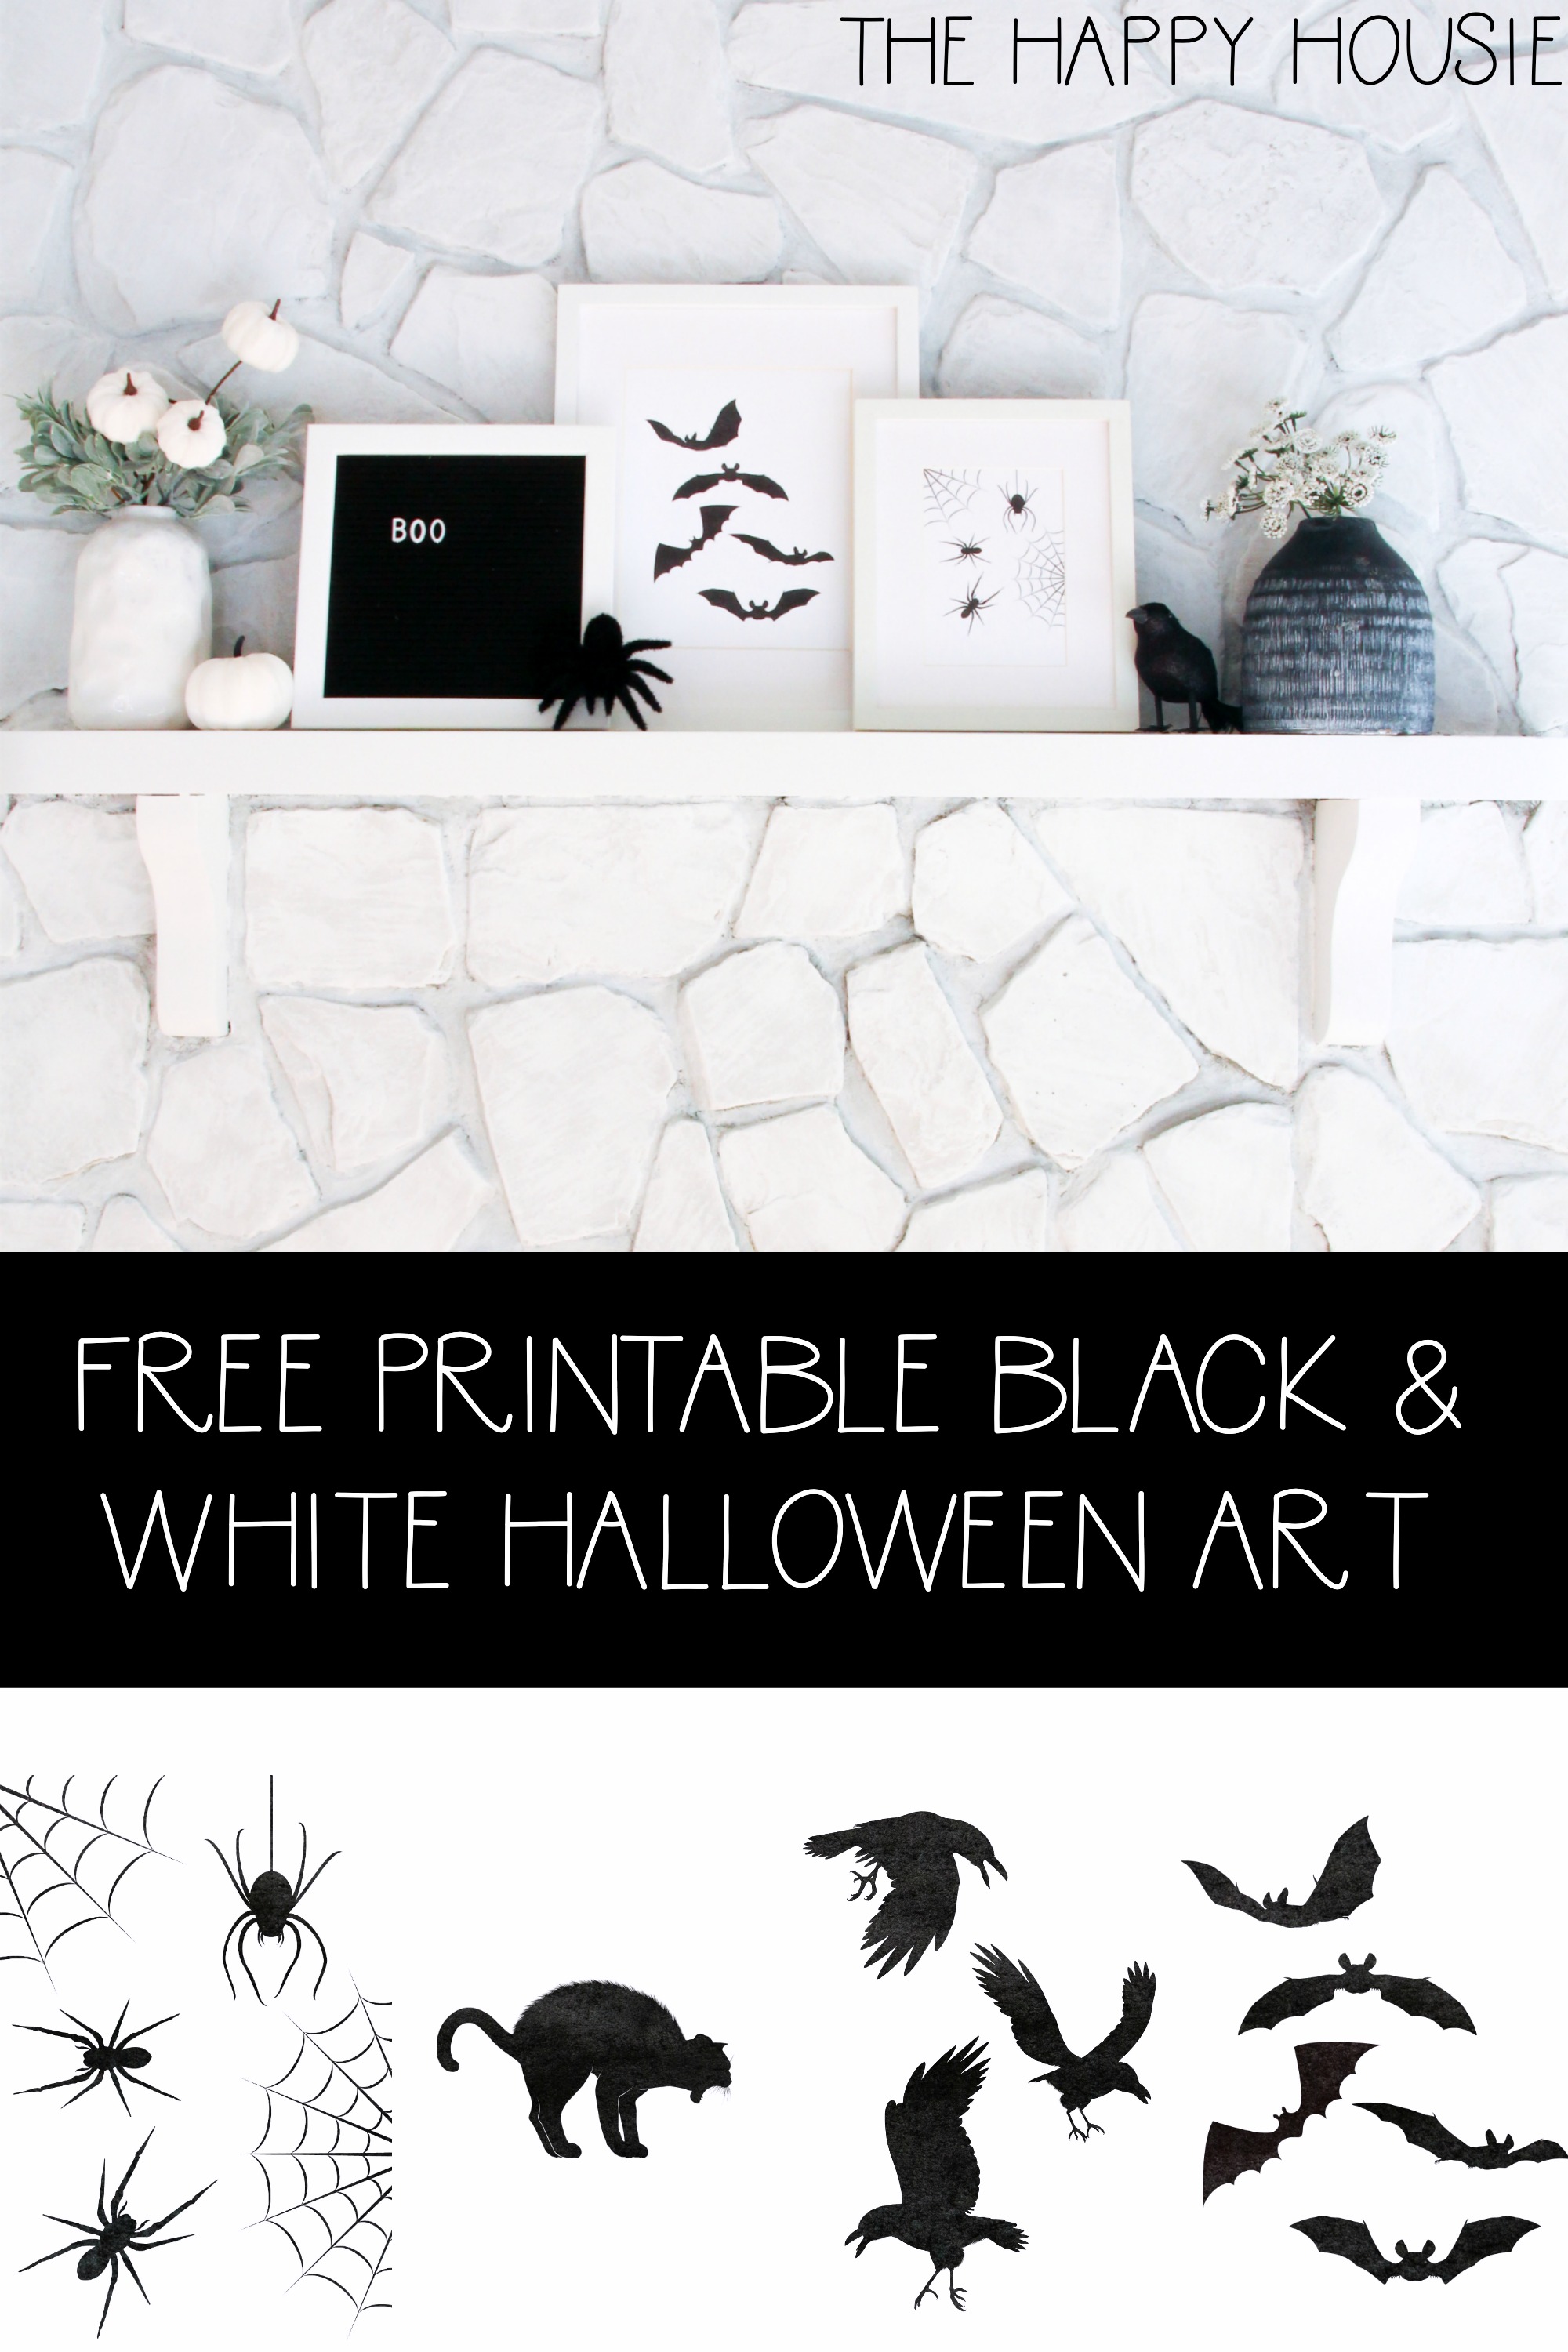 Free Printable Black and White Halloween Art poster.